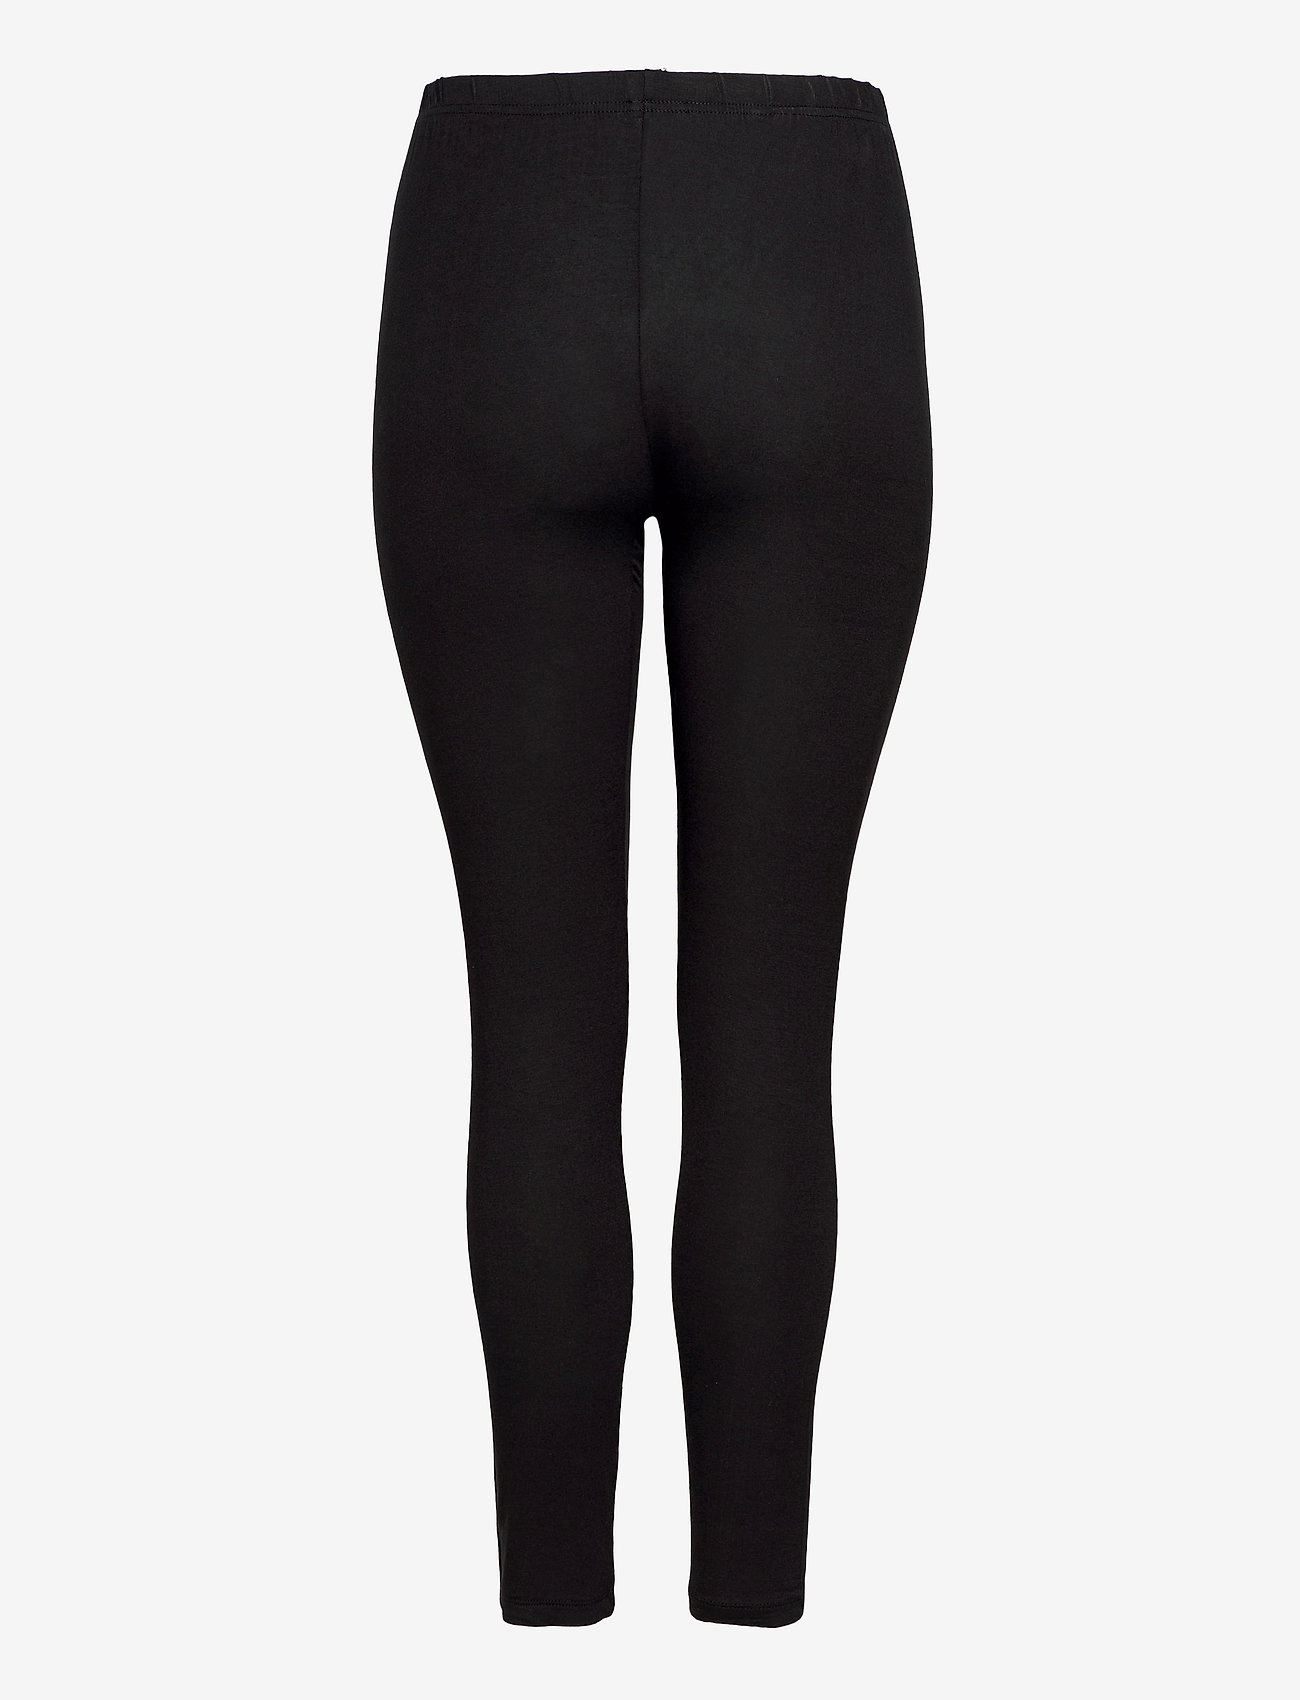 Zizzi Leggings Plus Size Slim Fit Stretchy Basic - Pantyhose | Boozt.com